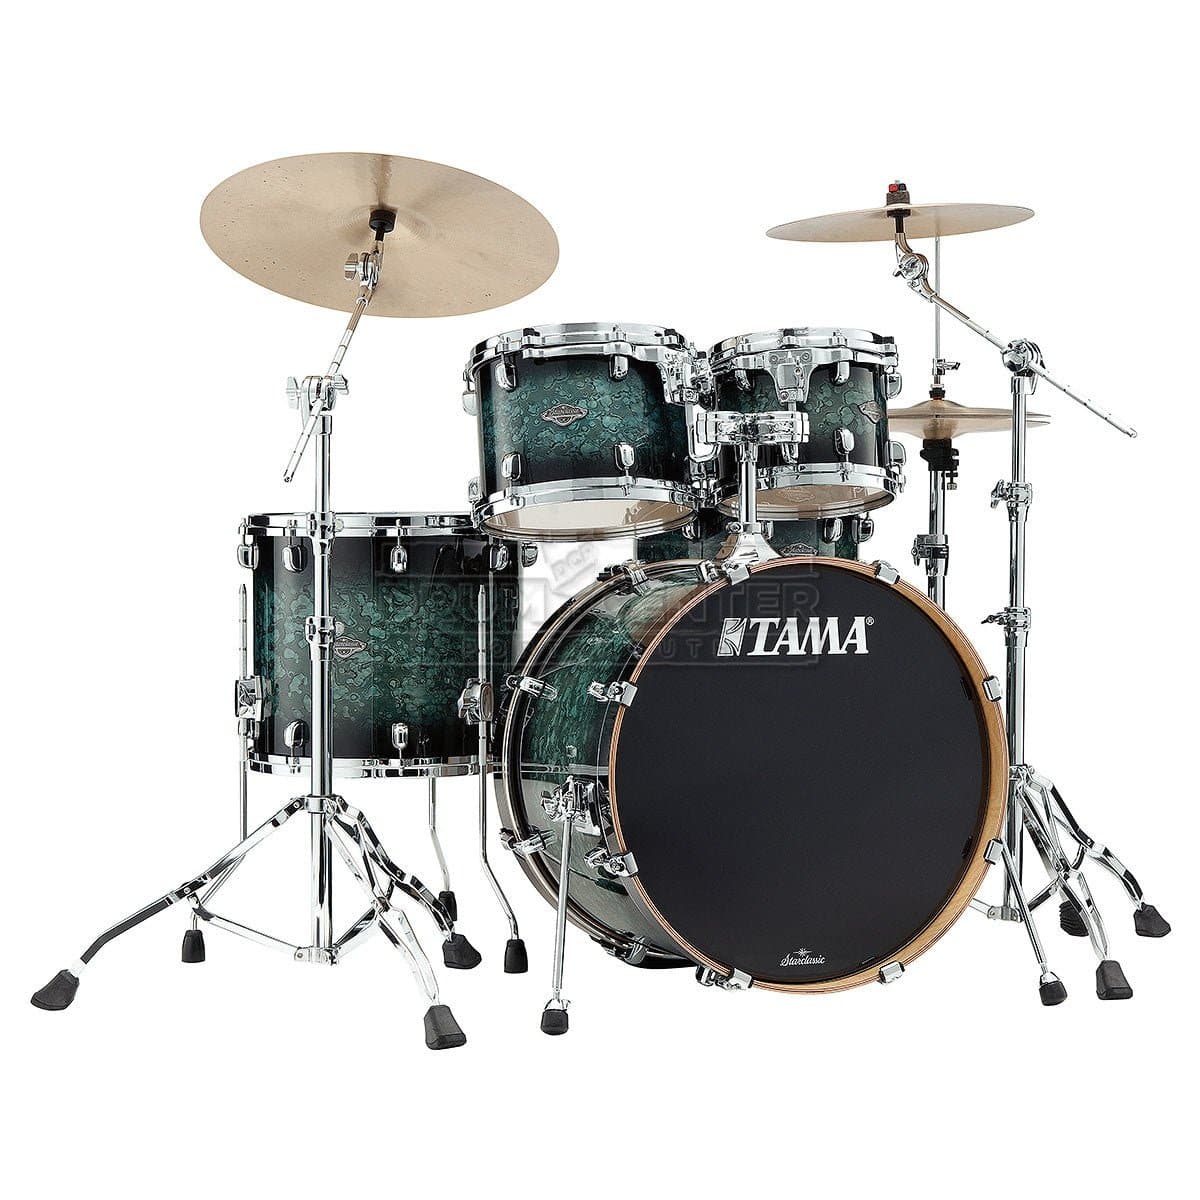 Tama Starclassic Performer 4pc Drum Set With 22 Bass Drum - Molten Steel Blue Burst